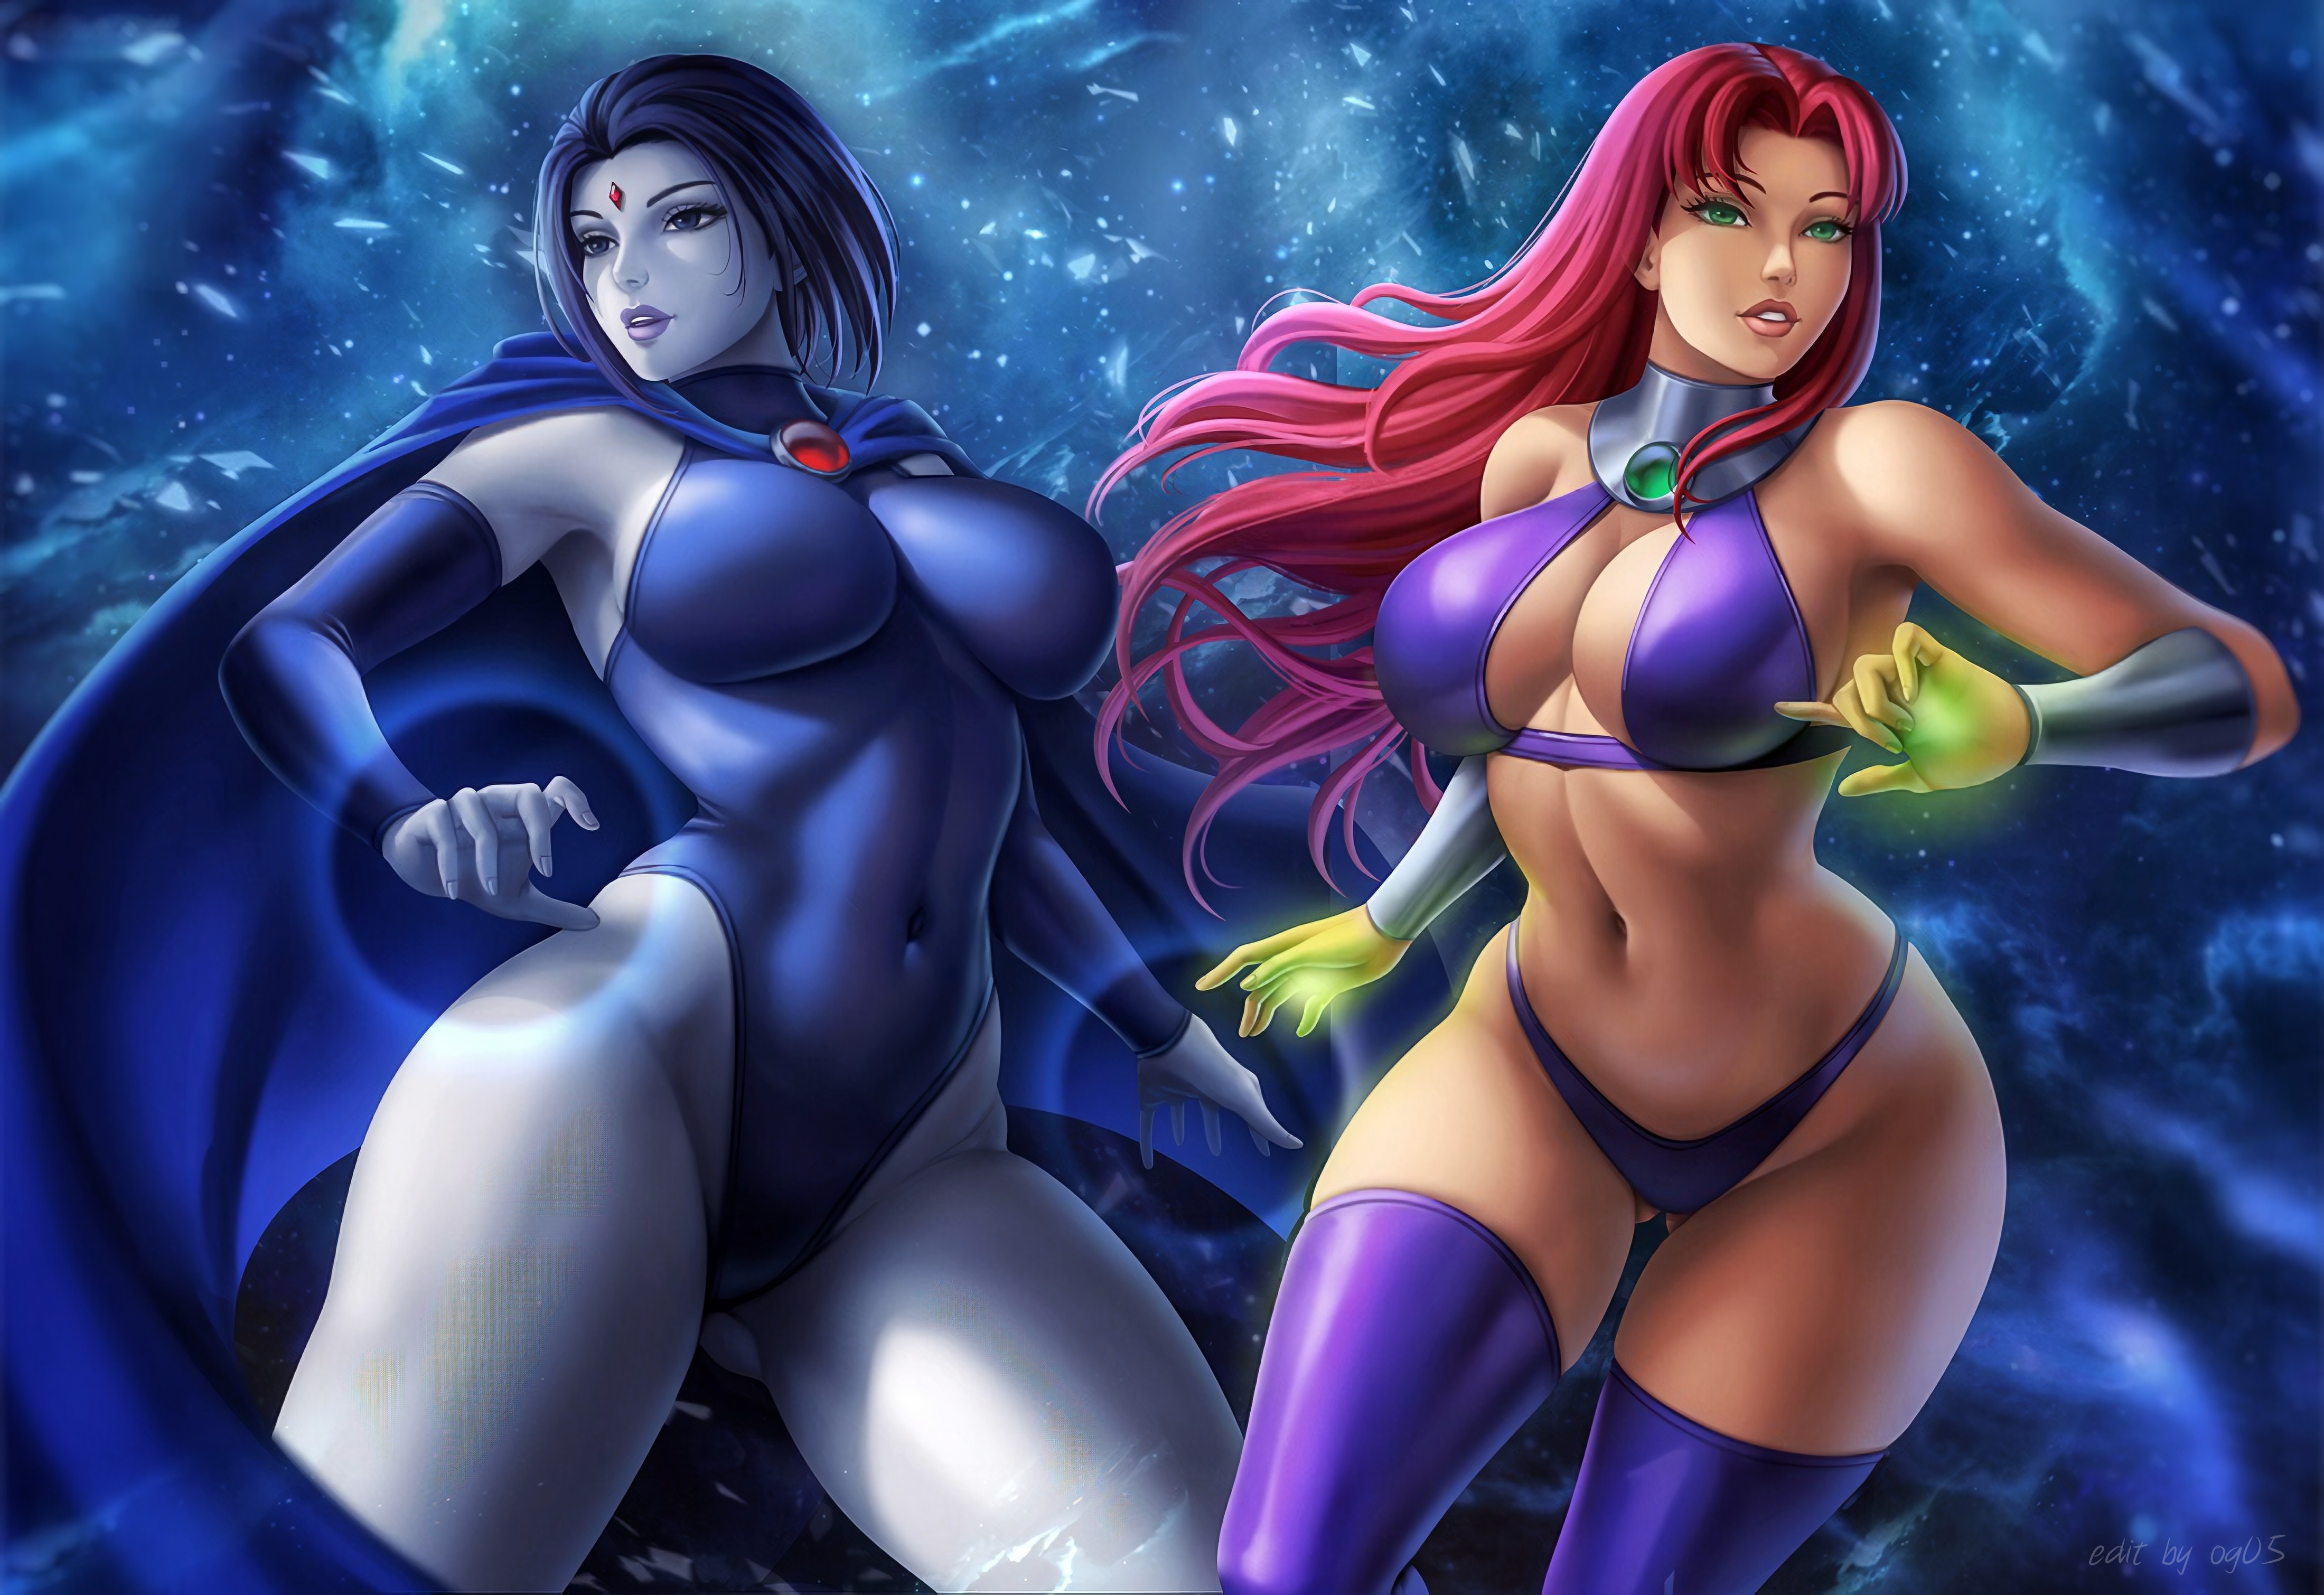 General 4400x3020 bikini redhead brunette Teen Titans Raven (DC Comics) Starfire big boobs thighs superheroines digital art watermarked